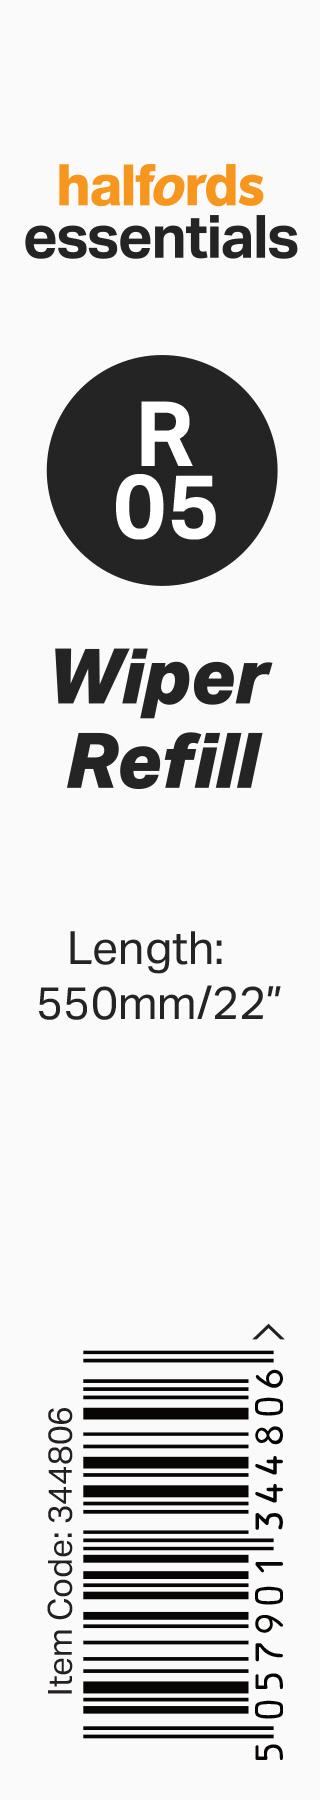 Halfords Essentials Wiper Blade Refill R05 - 22 Inch